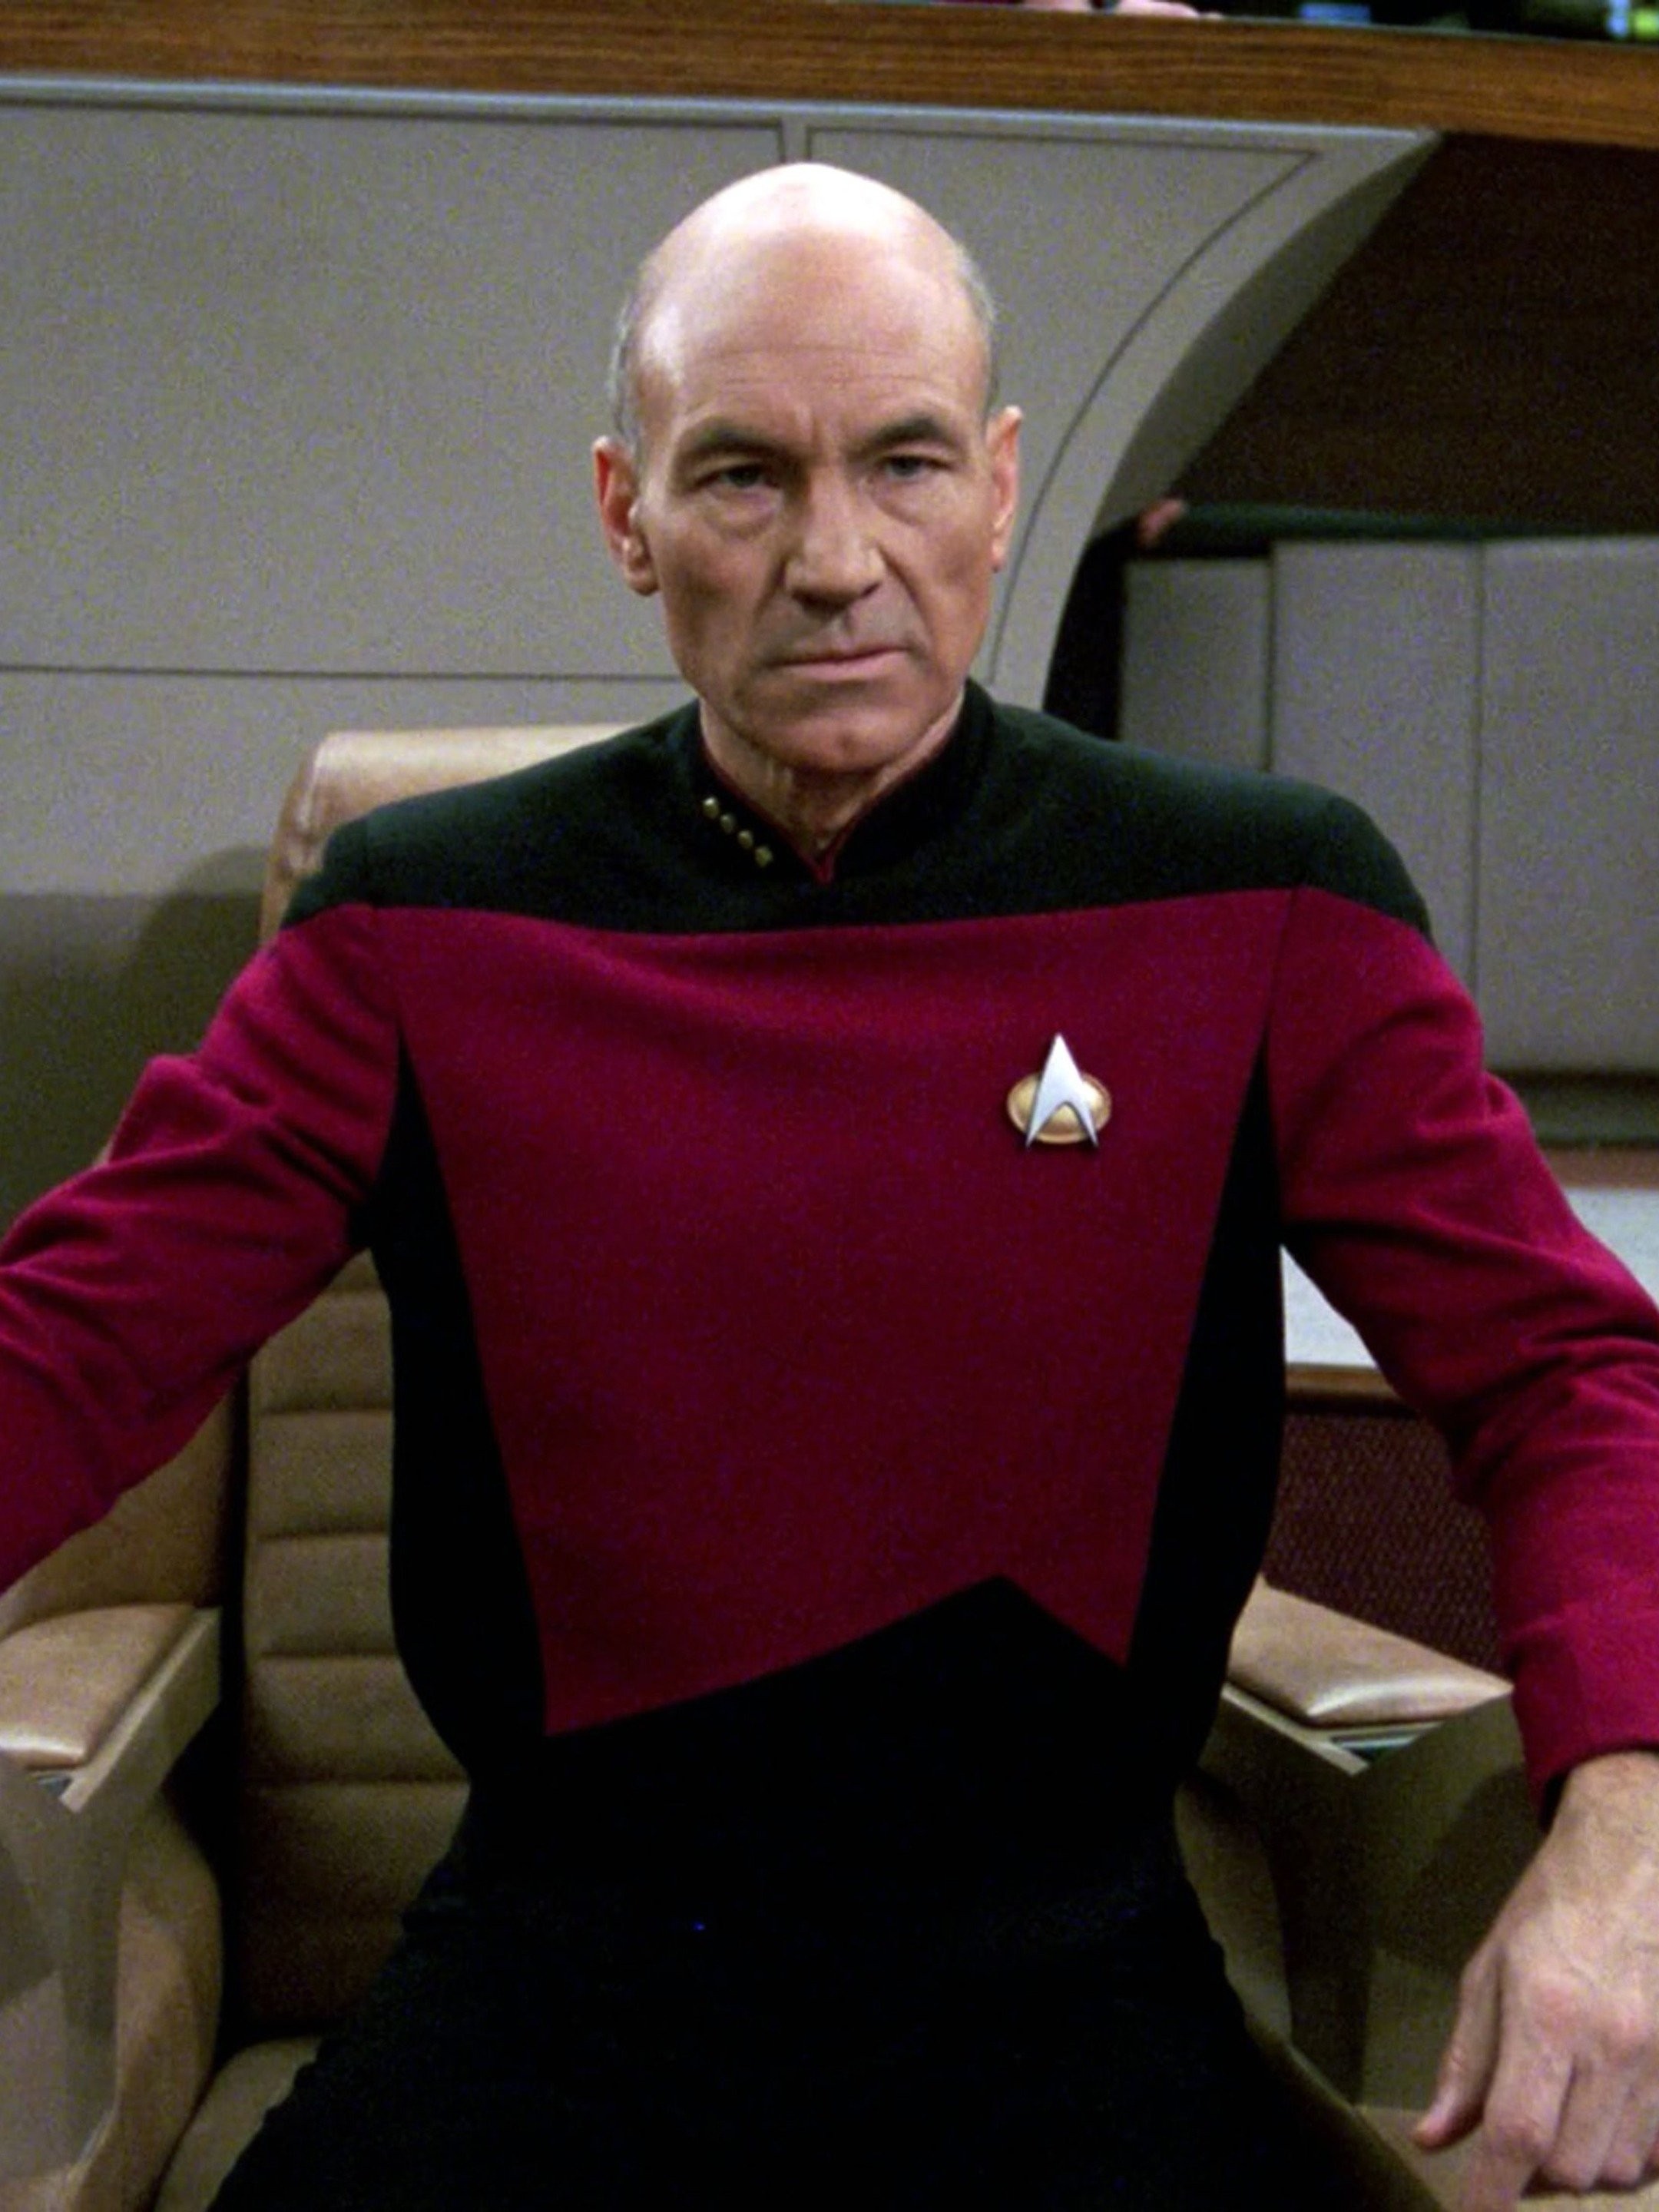 Star Trek: The Next Generation S1 E3 Code of Honor / Recap - TV